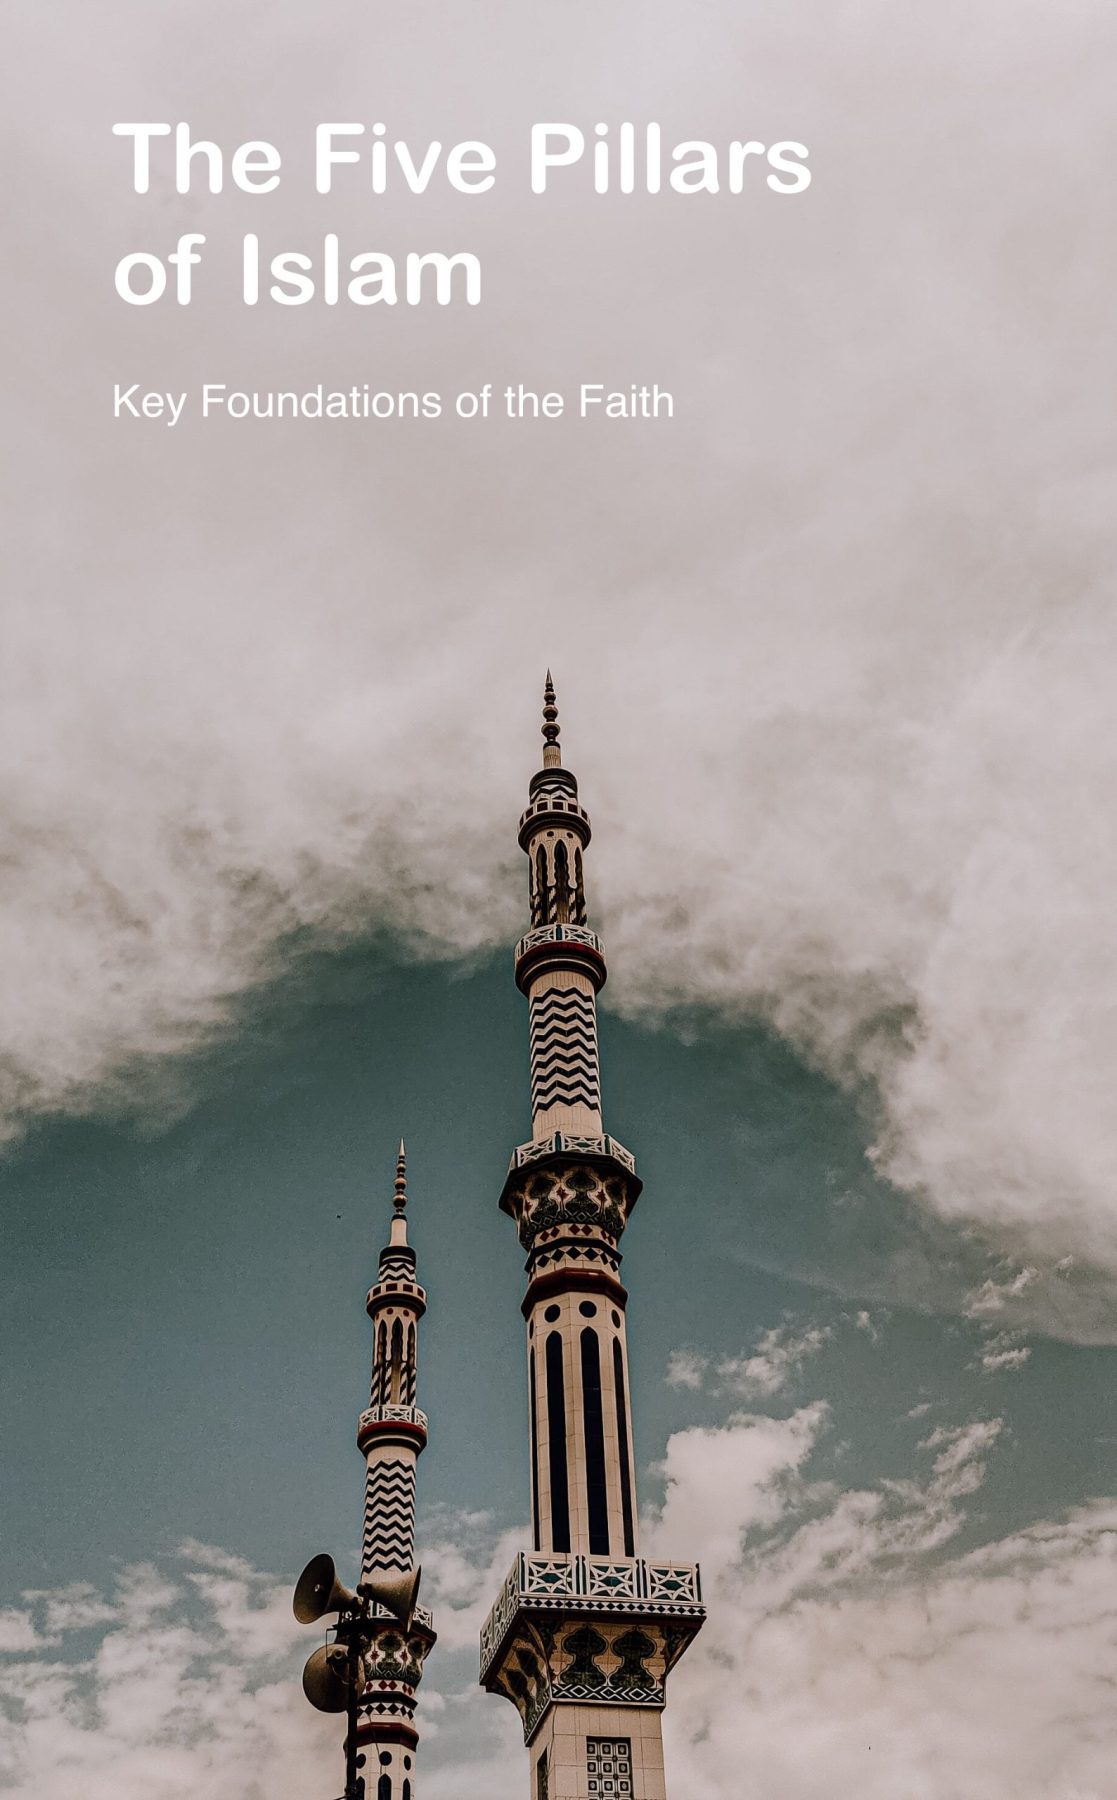 The Five Pillars of Islam: Key Foundations of the Faith